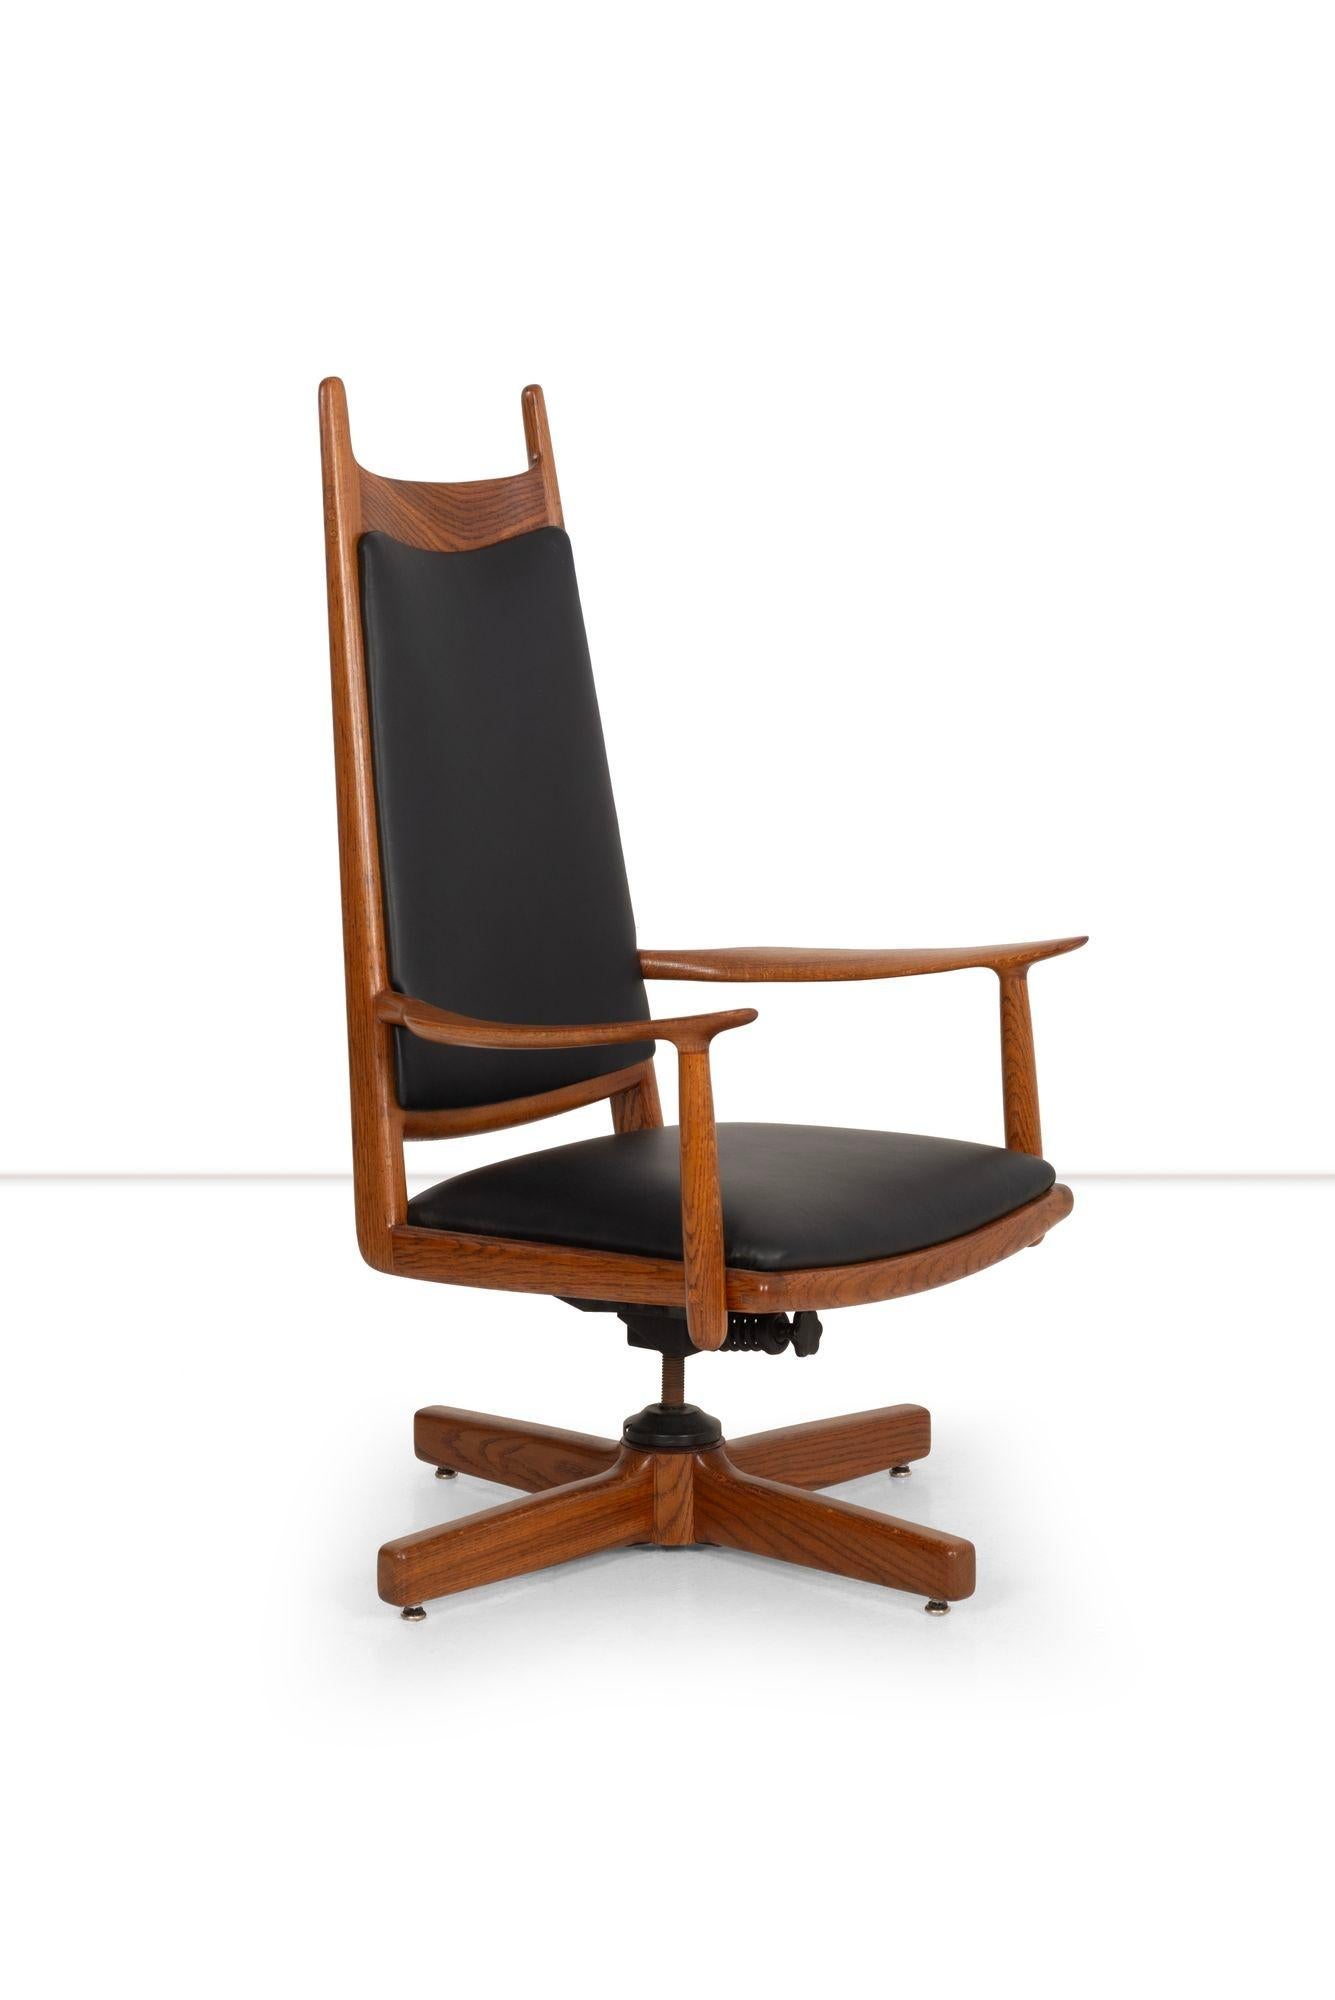 American Craftsman Sam Maloof Highback Horned Desk Chair For Sale